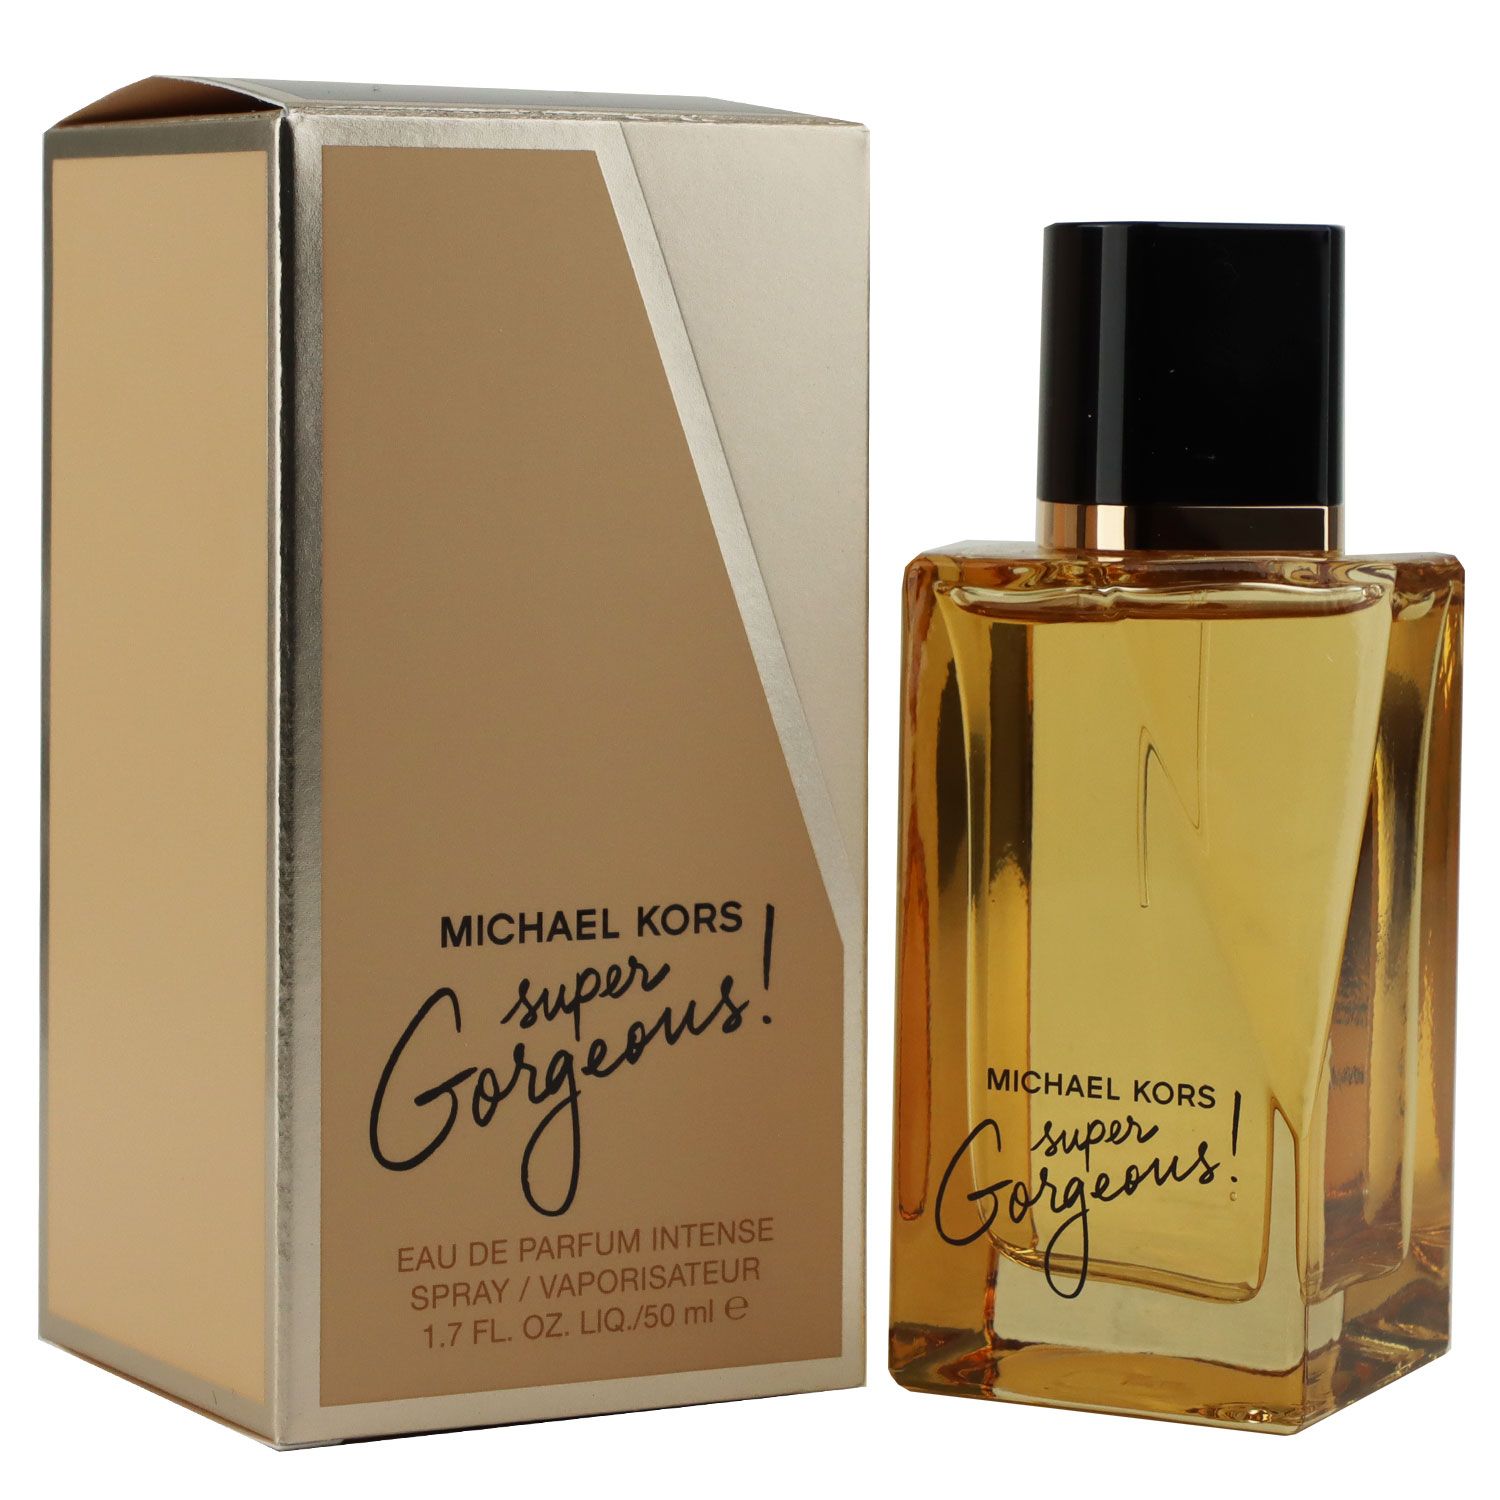 Gorgeous Michael Kors perfume  a fragrance for women 2021